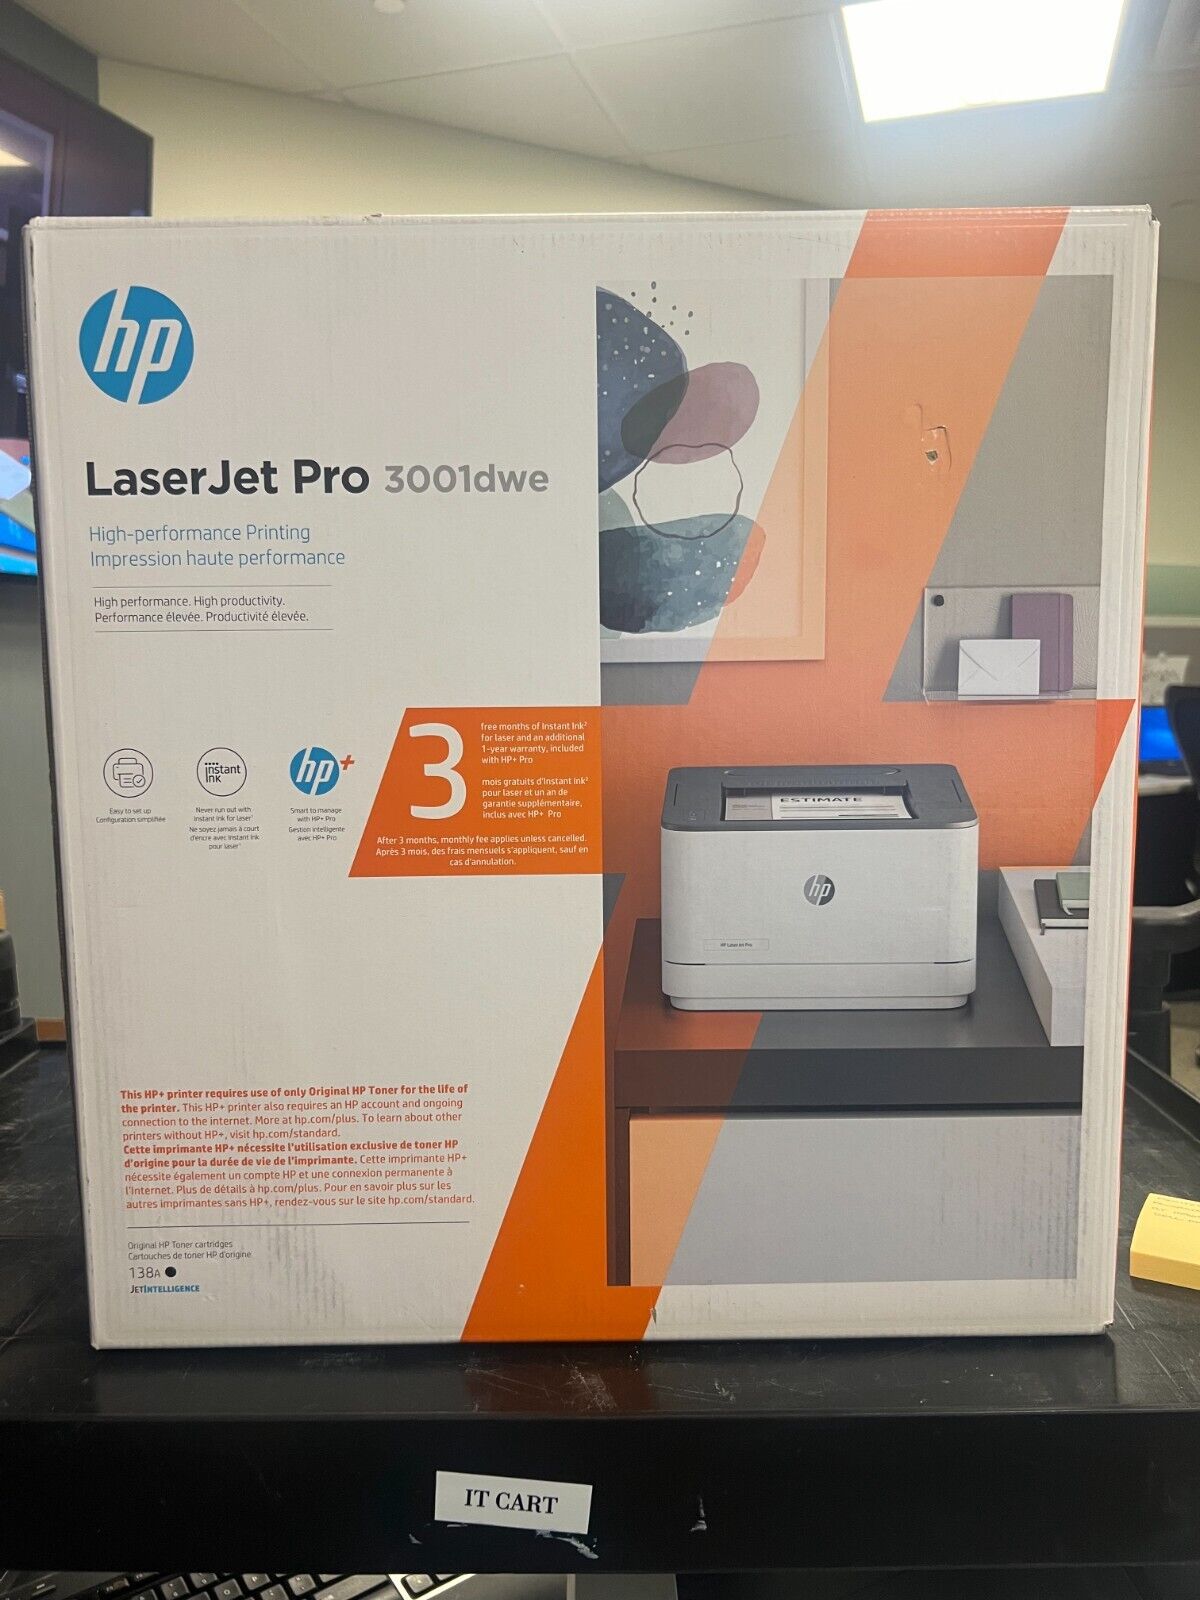 HP LaserJet Pro 3001dwe - New but Open Box